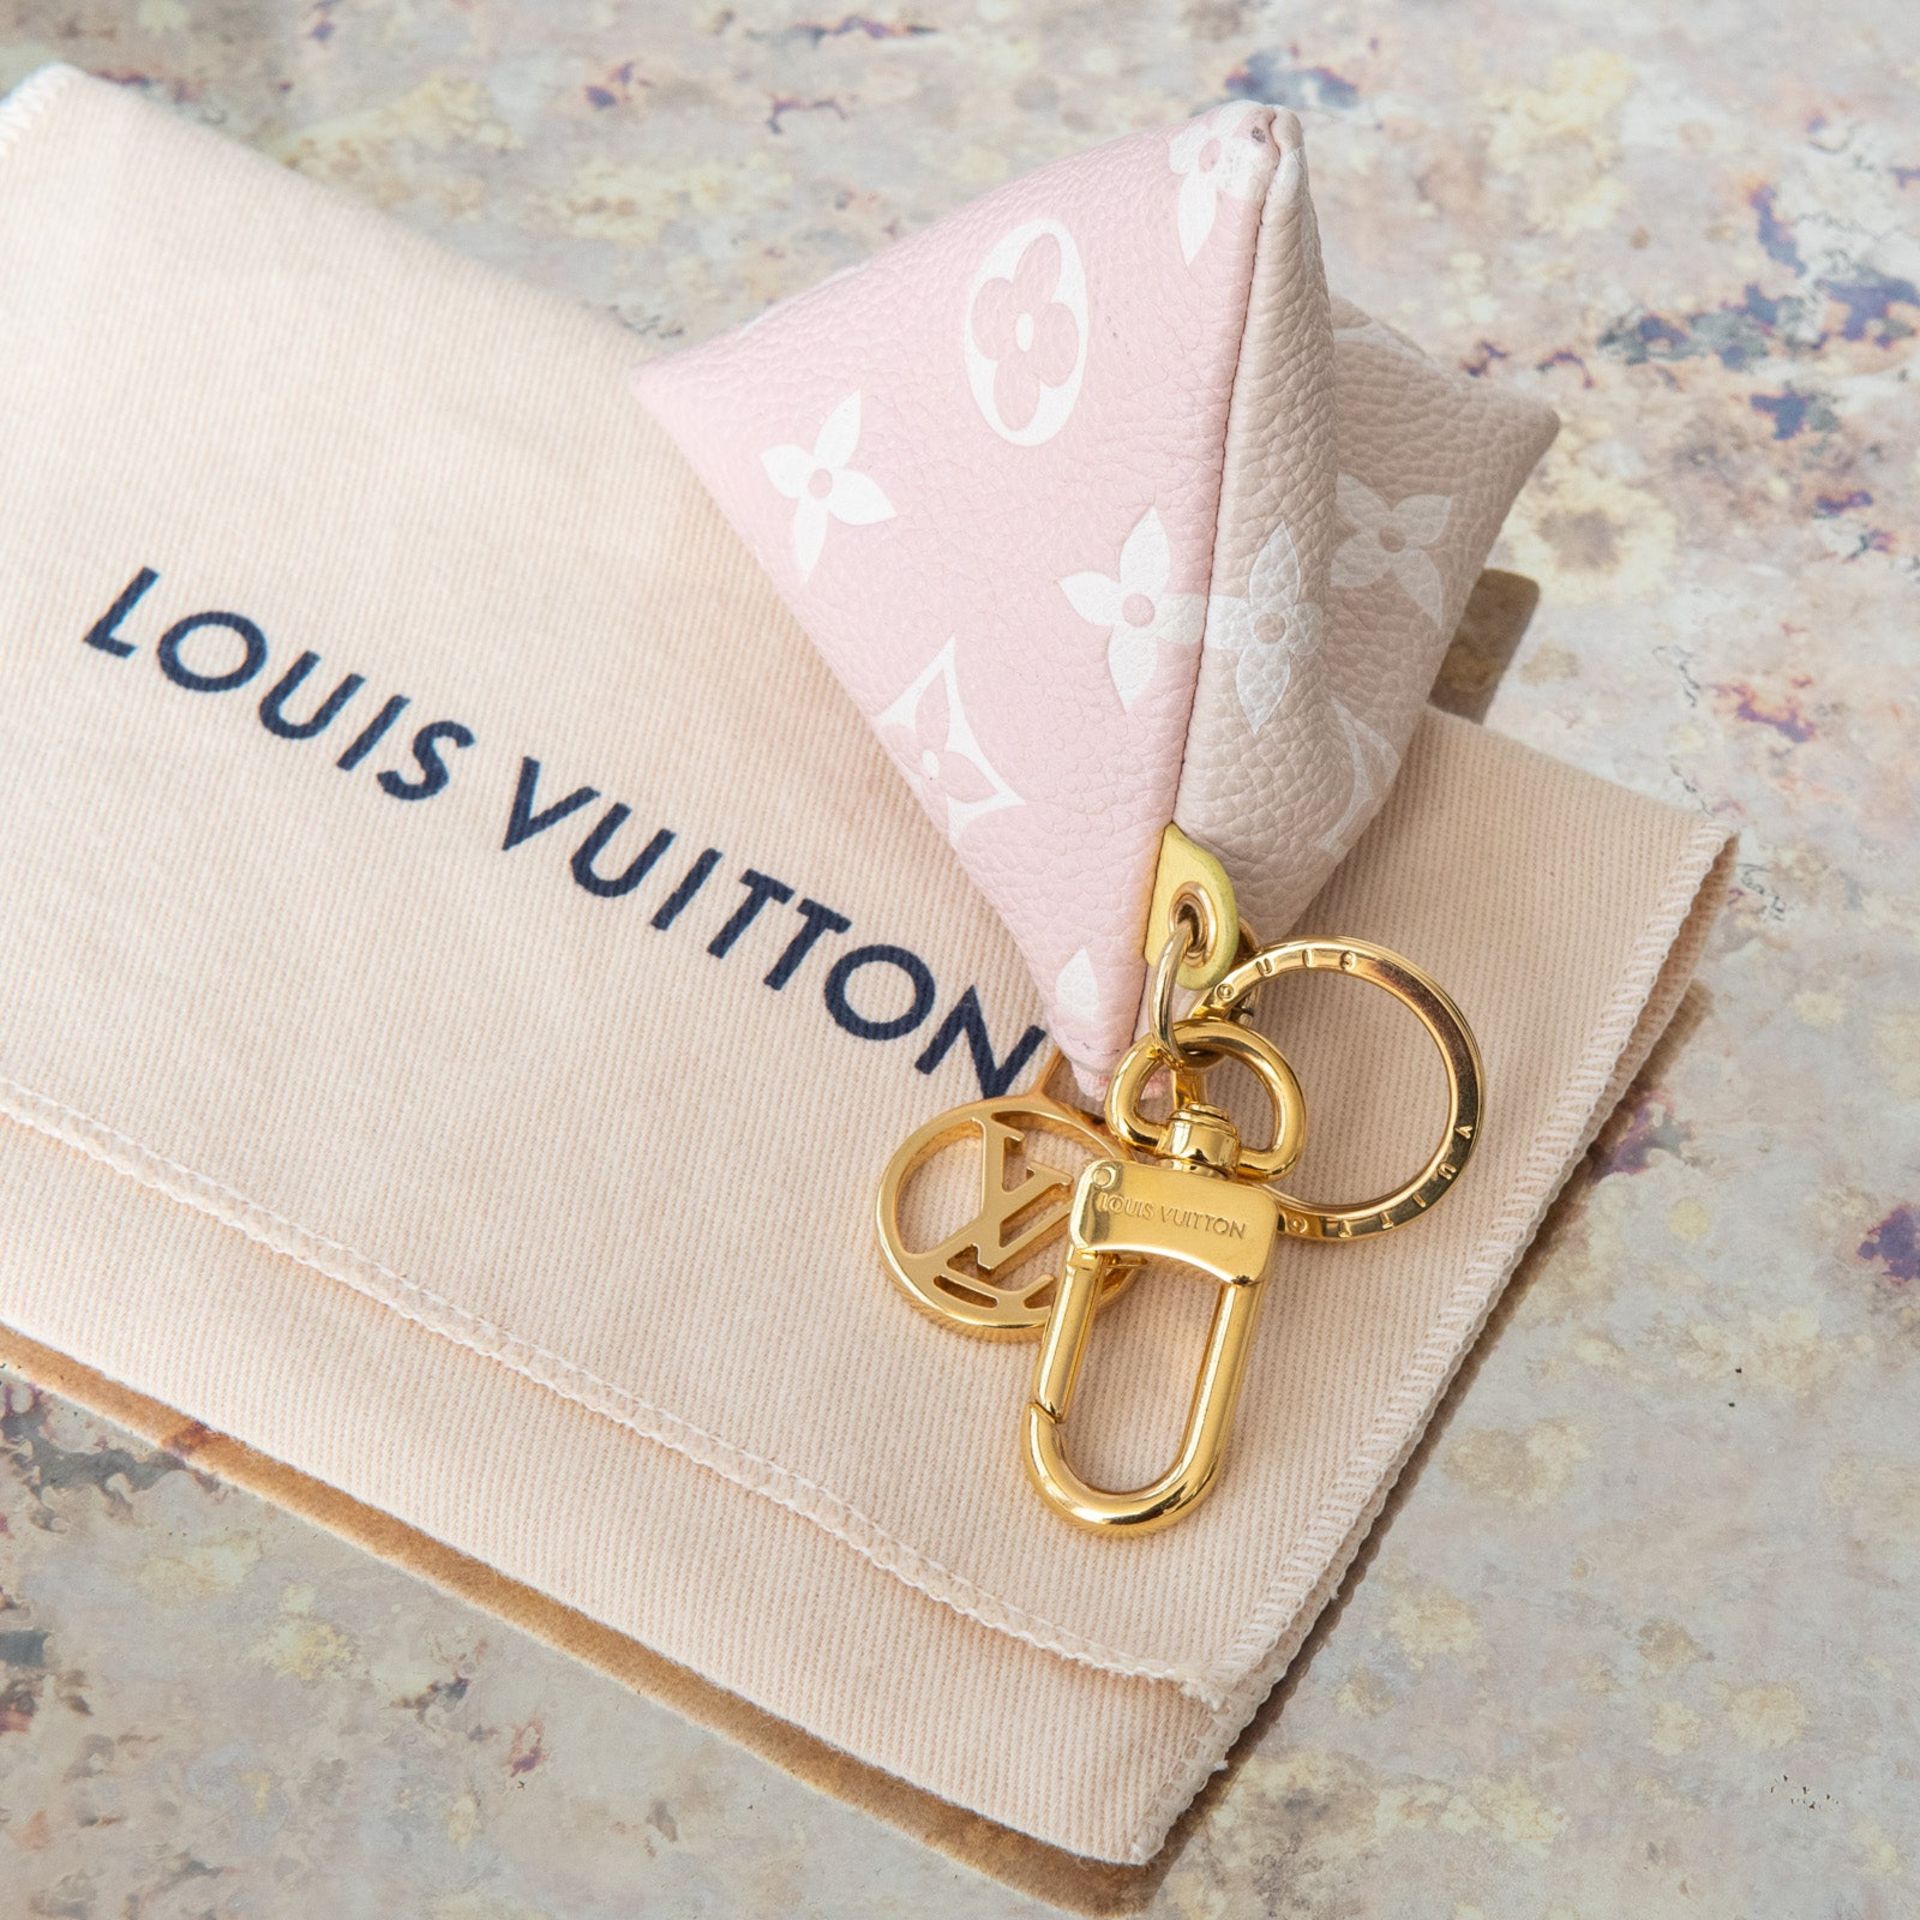 Louis Vuitton Berlingot Bag Charm And Key Holder - Image 2 of 5